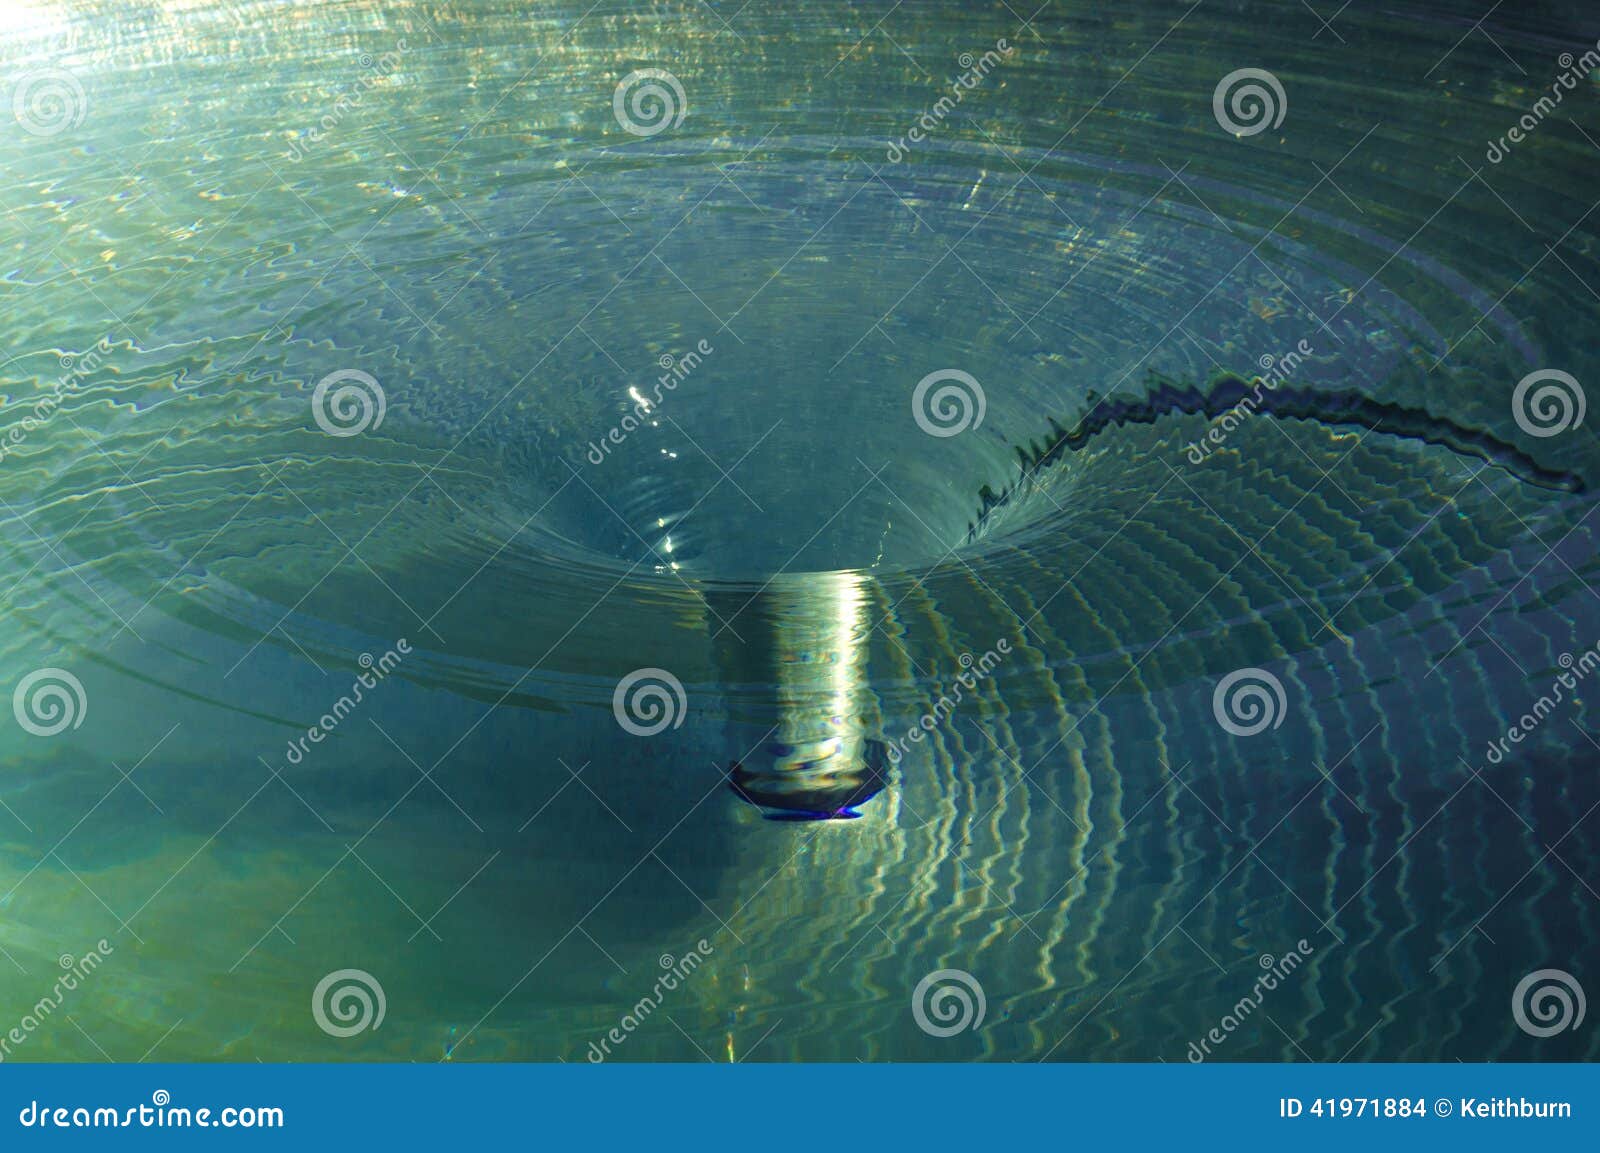 https://thumbs.dreamstime.com/z/whirlpool-water-vortex-blues-greens-sunlight-sparkling-off-41971884.jpg